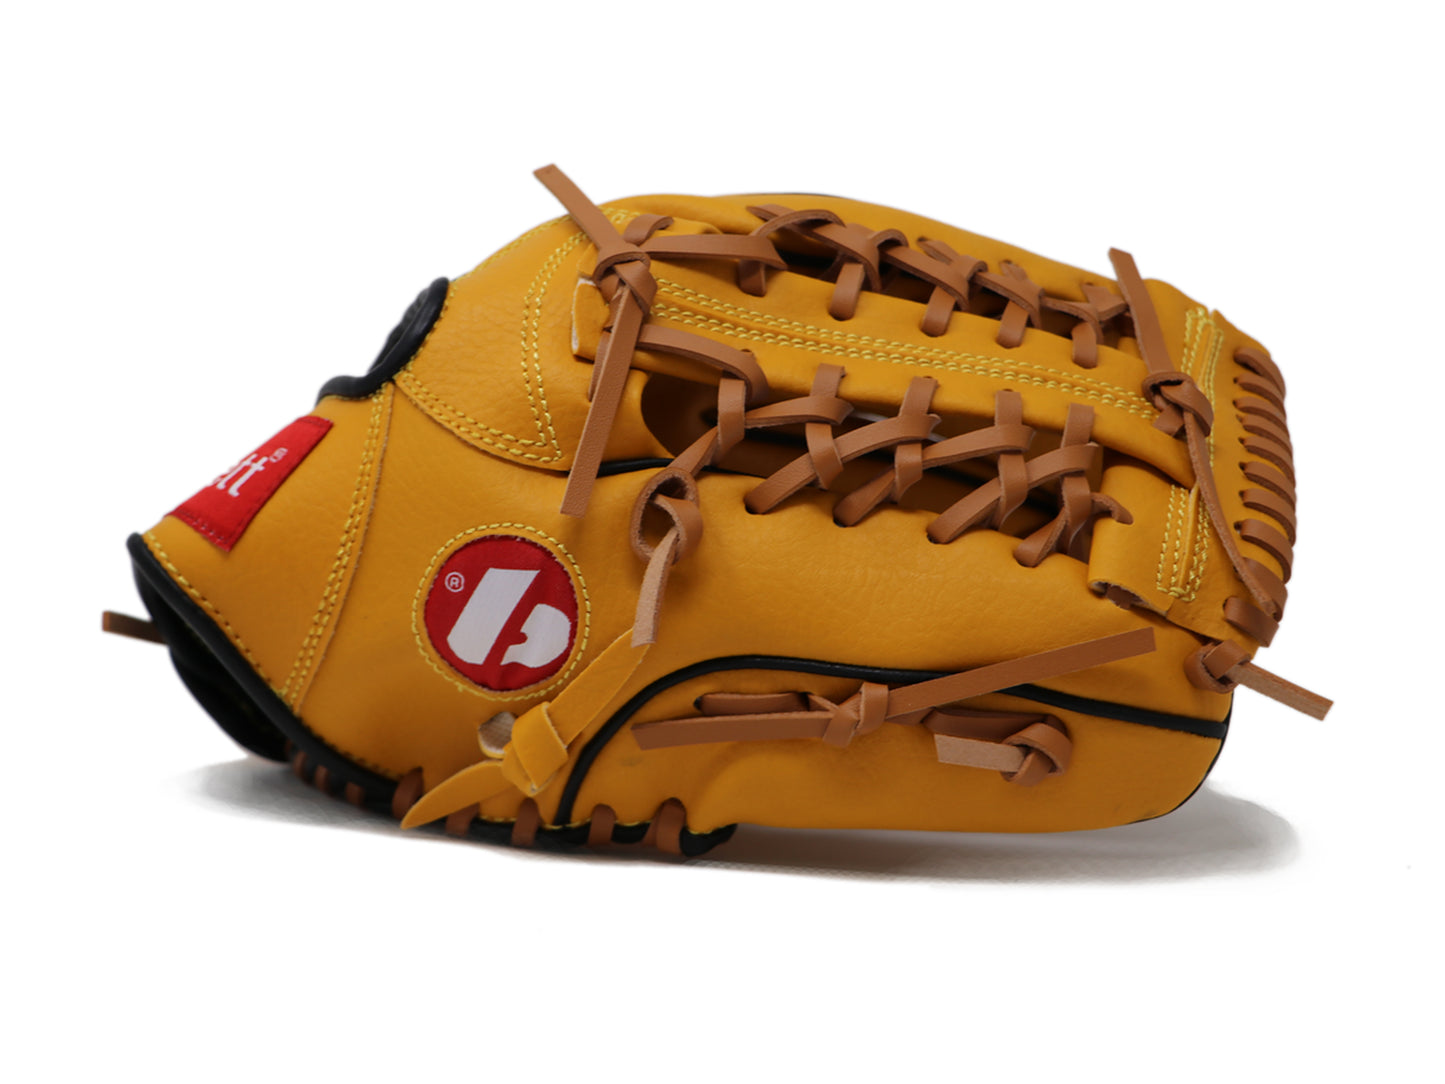 JL-120-baseball glove, outfiled, REG size 12" brown TAN